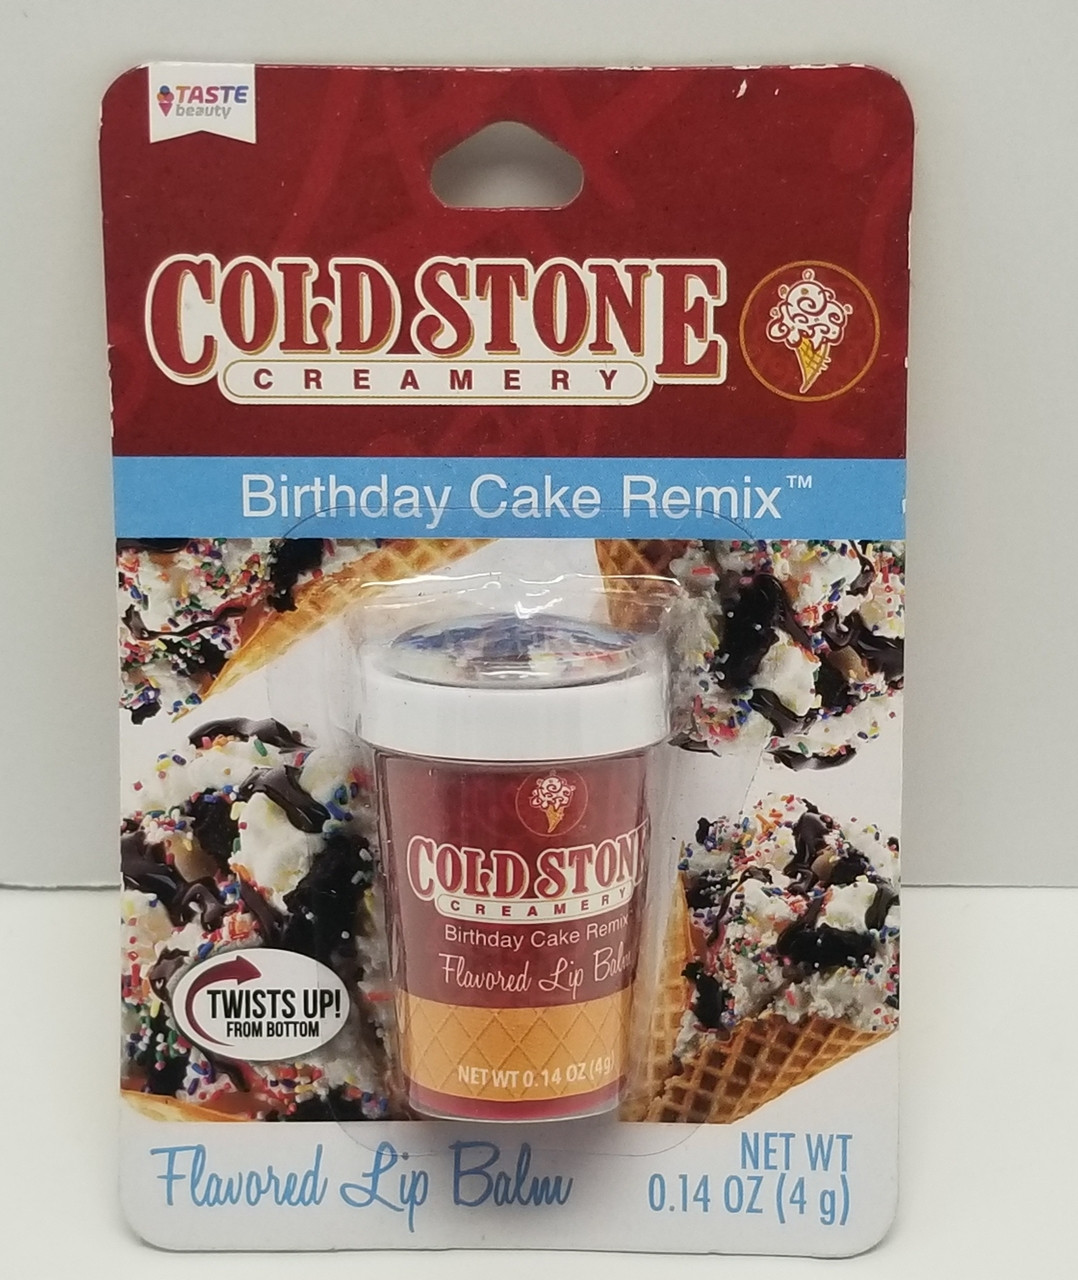 Birthday Cake Remix Cold Stone
 Cold Stone Creamery "Birthday Cake Remix" Flavored Lip